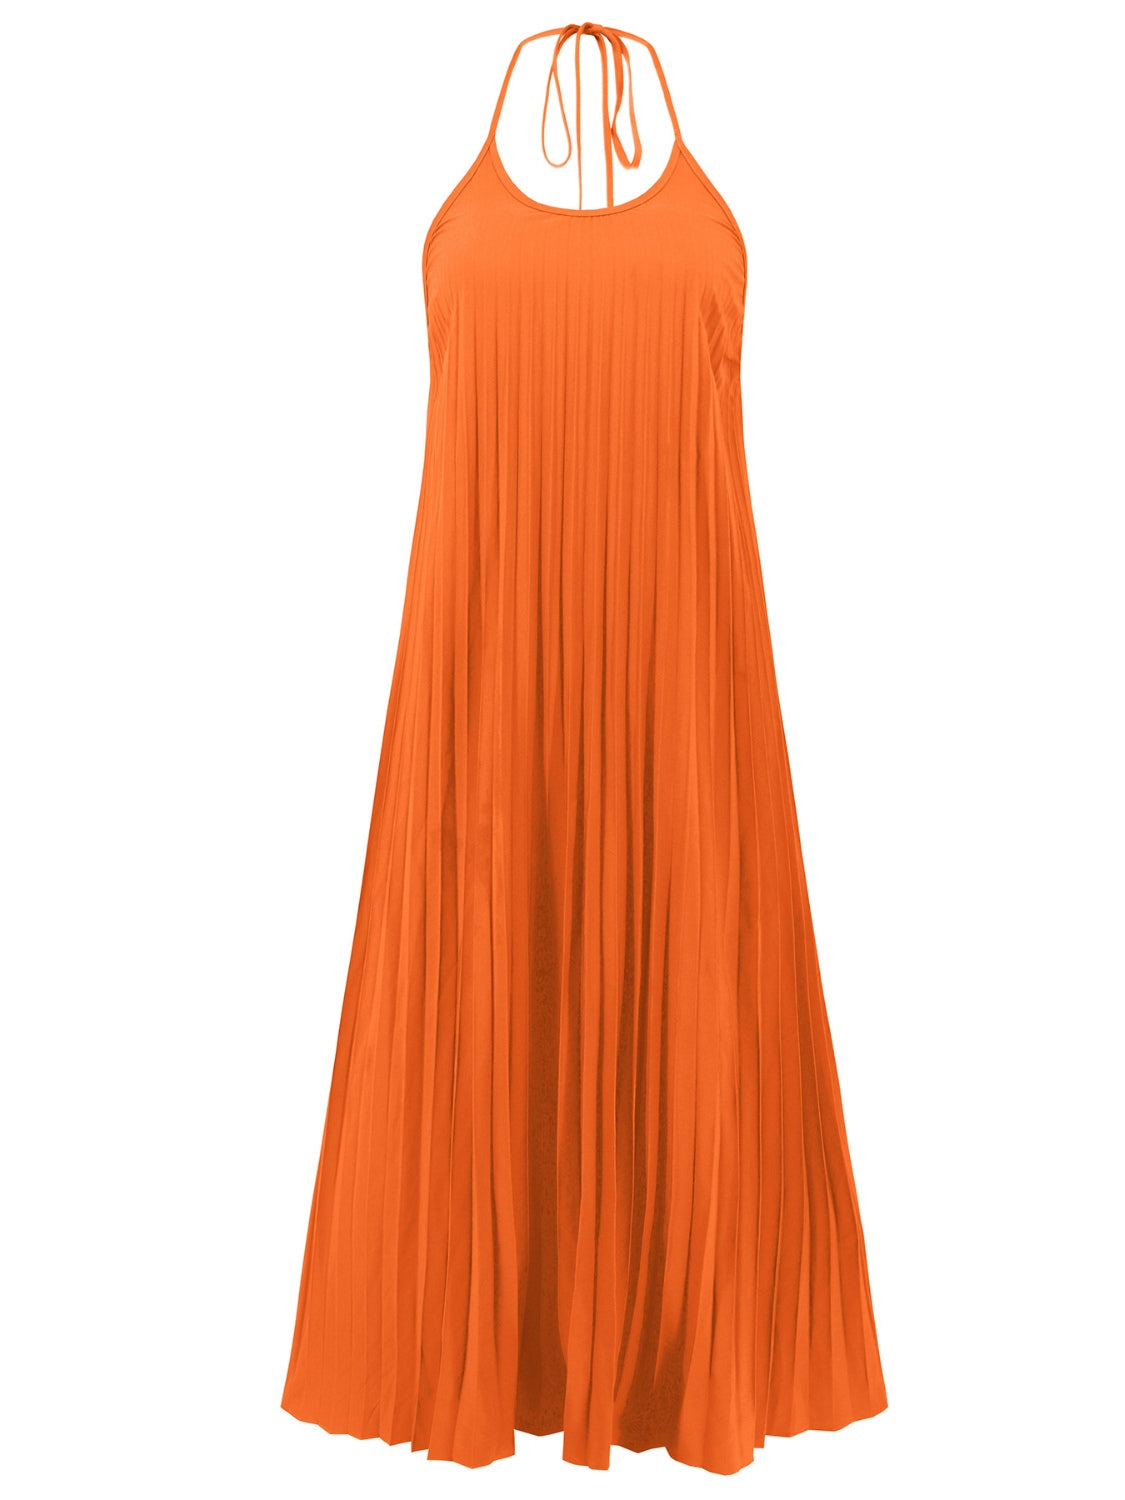 Pleated Halter Neck Sleeveless Dress (6 colors)